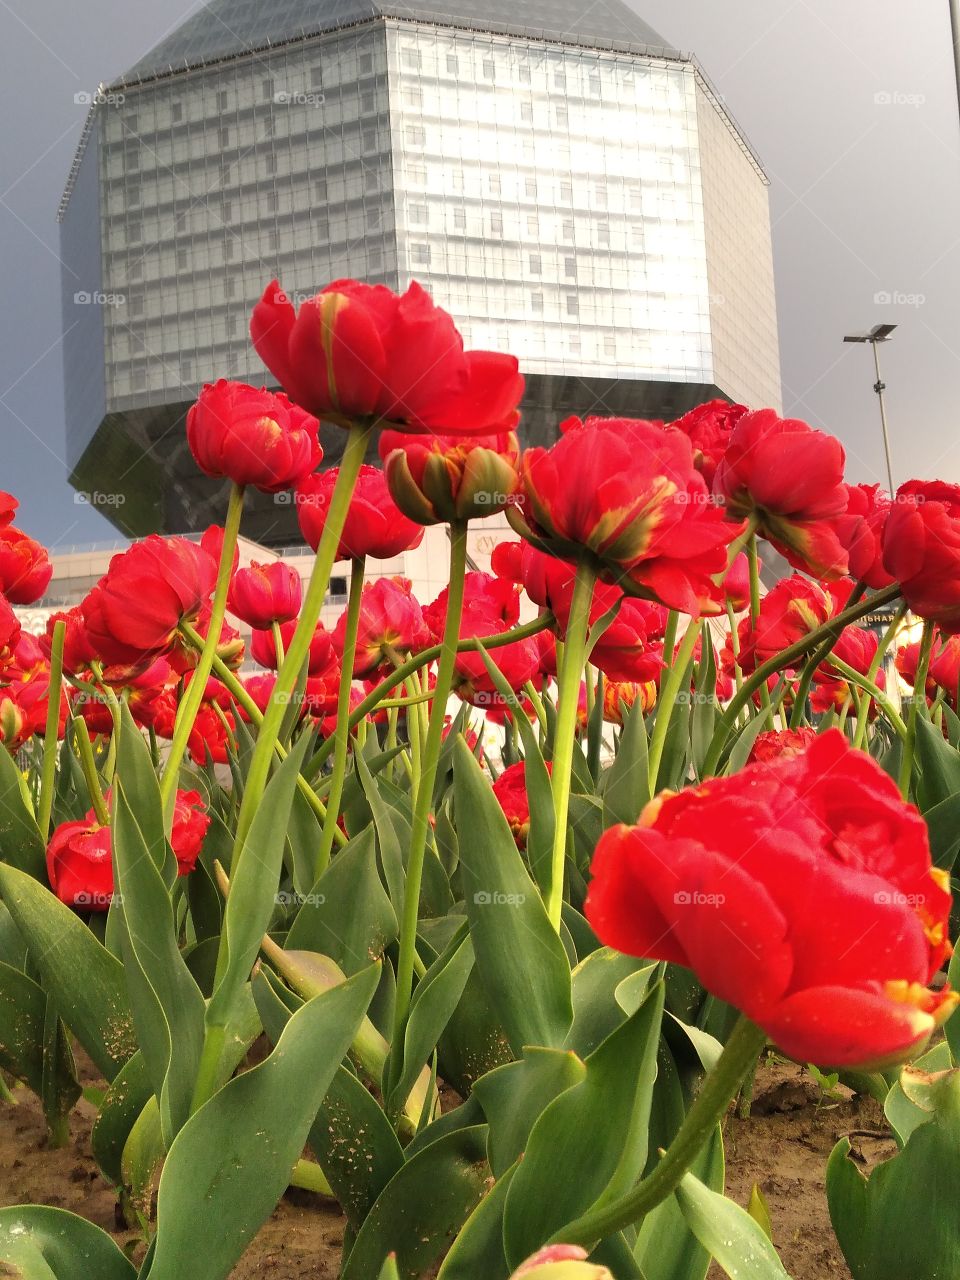 flowers in city